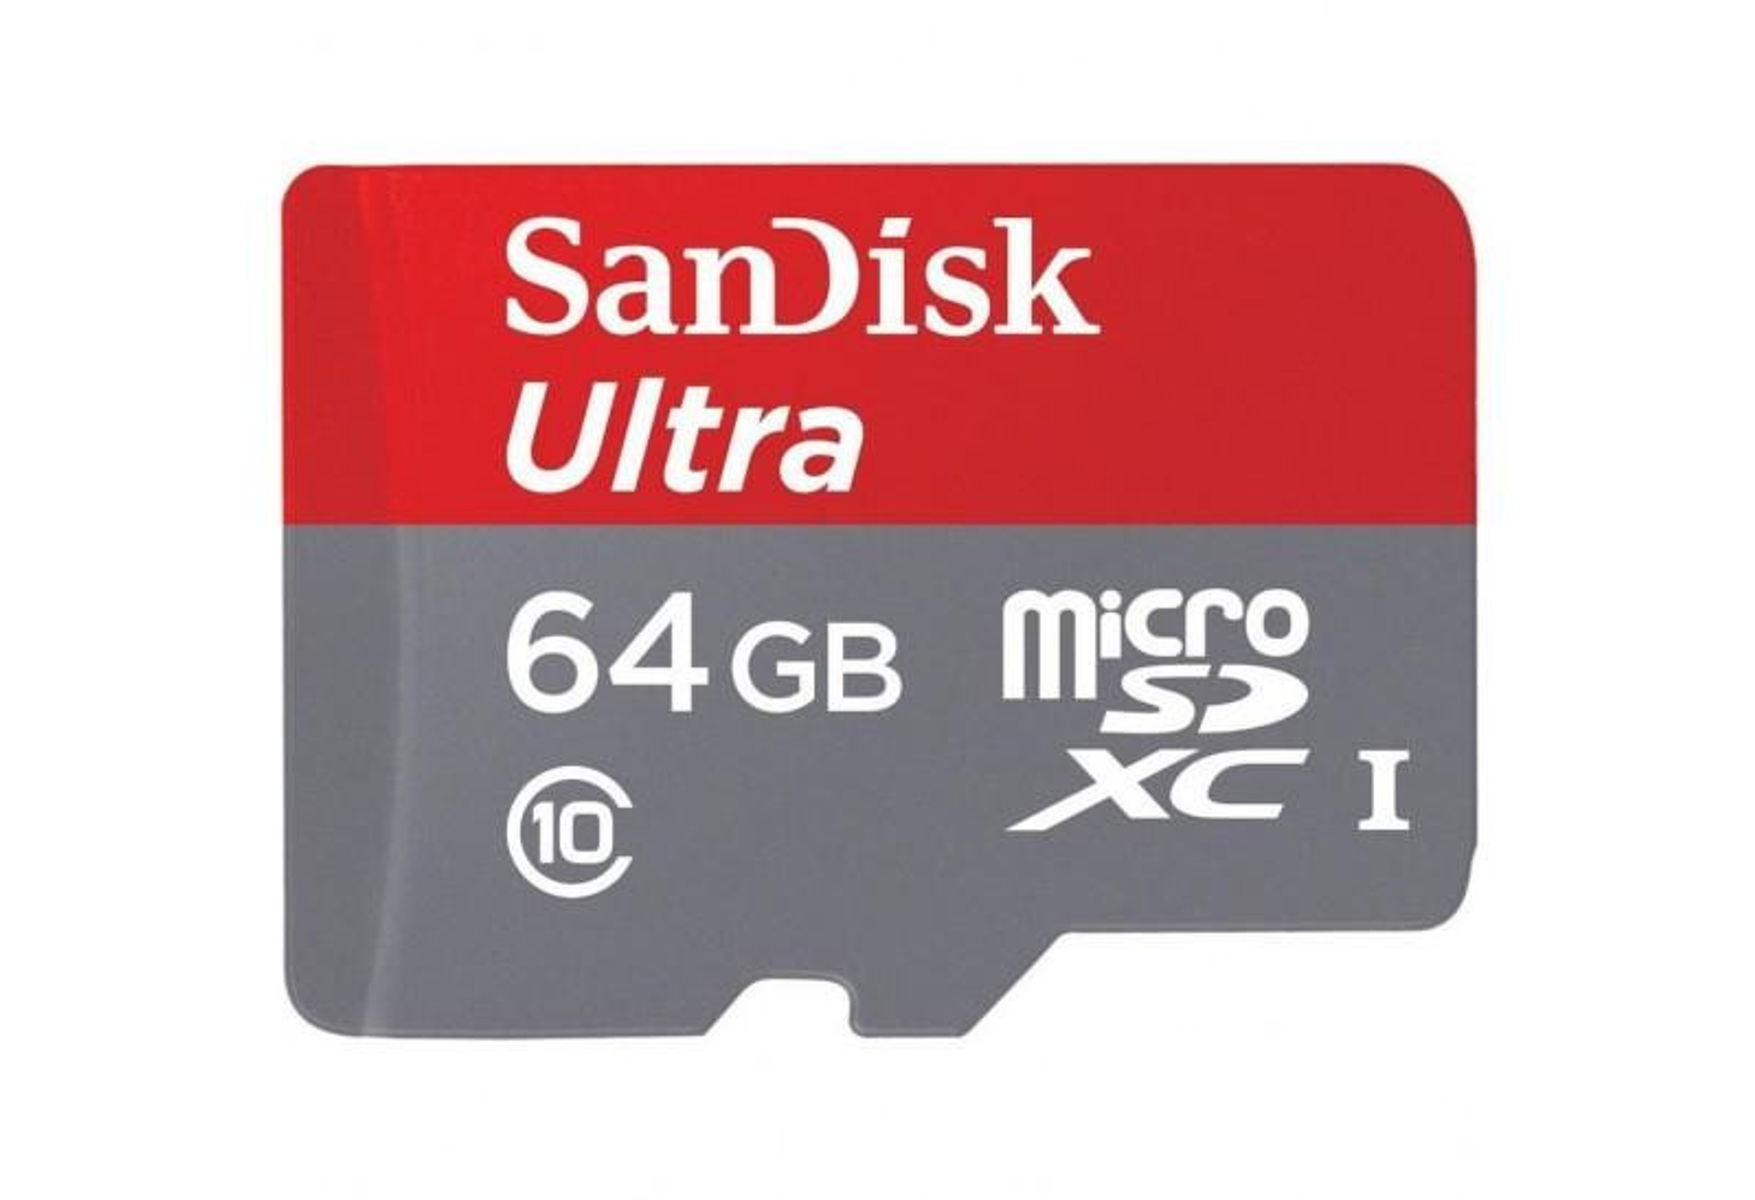 SANDISK 100 MSDXC Micro-SDXC 64 GB, (100MB/S,UHS-, UL. Speicherkarte, 173472 MB/s 64GB